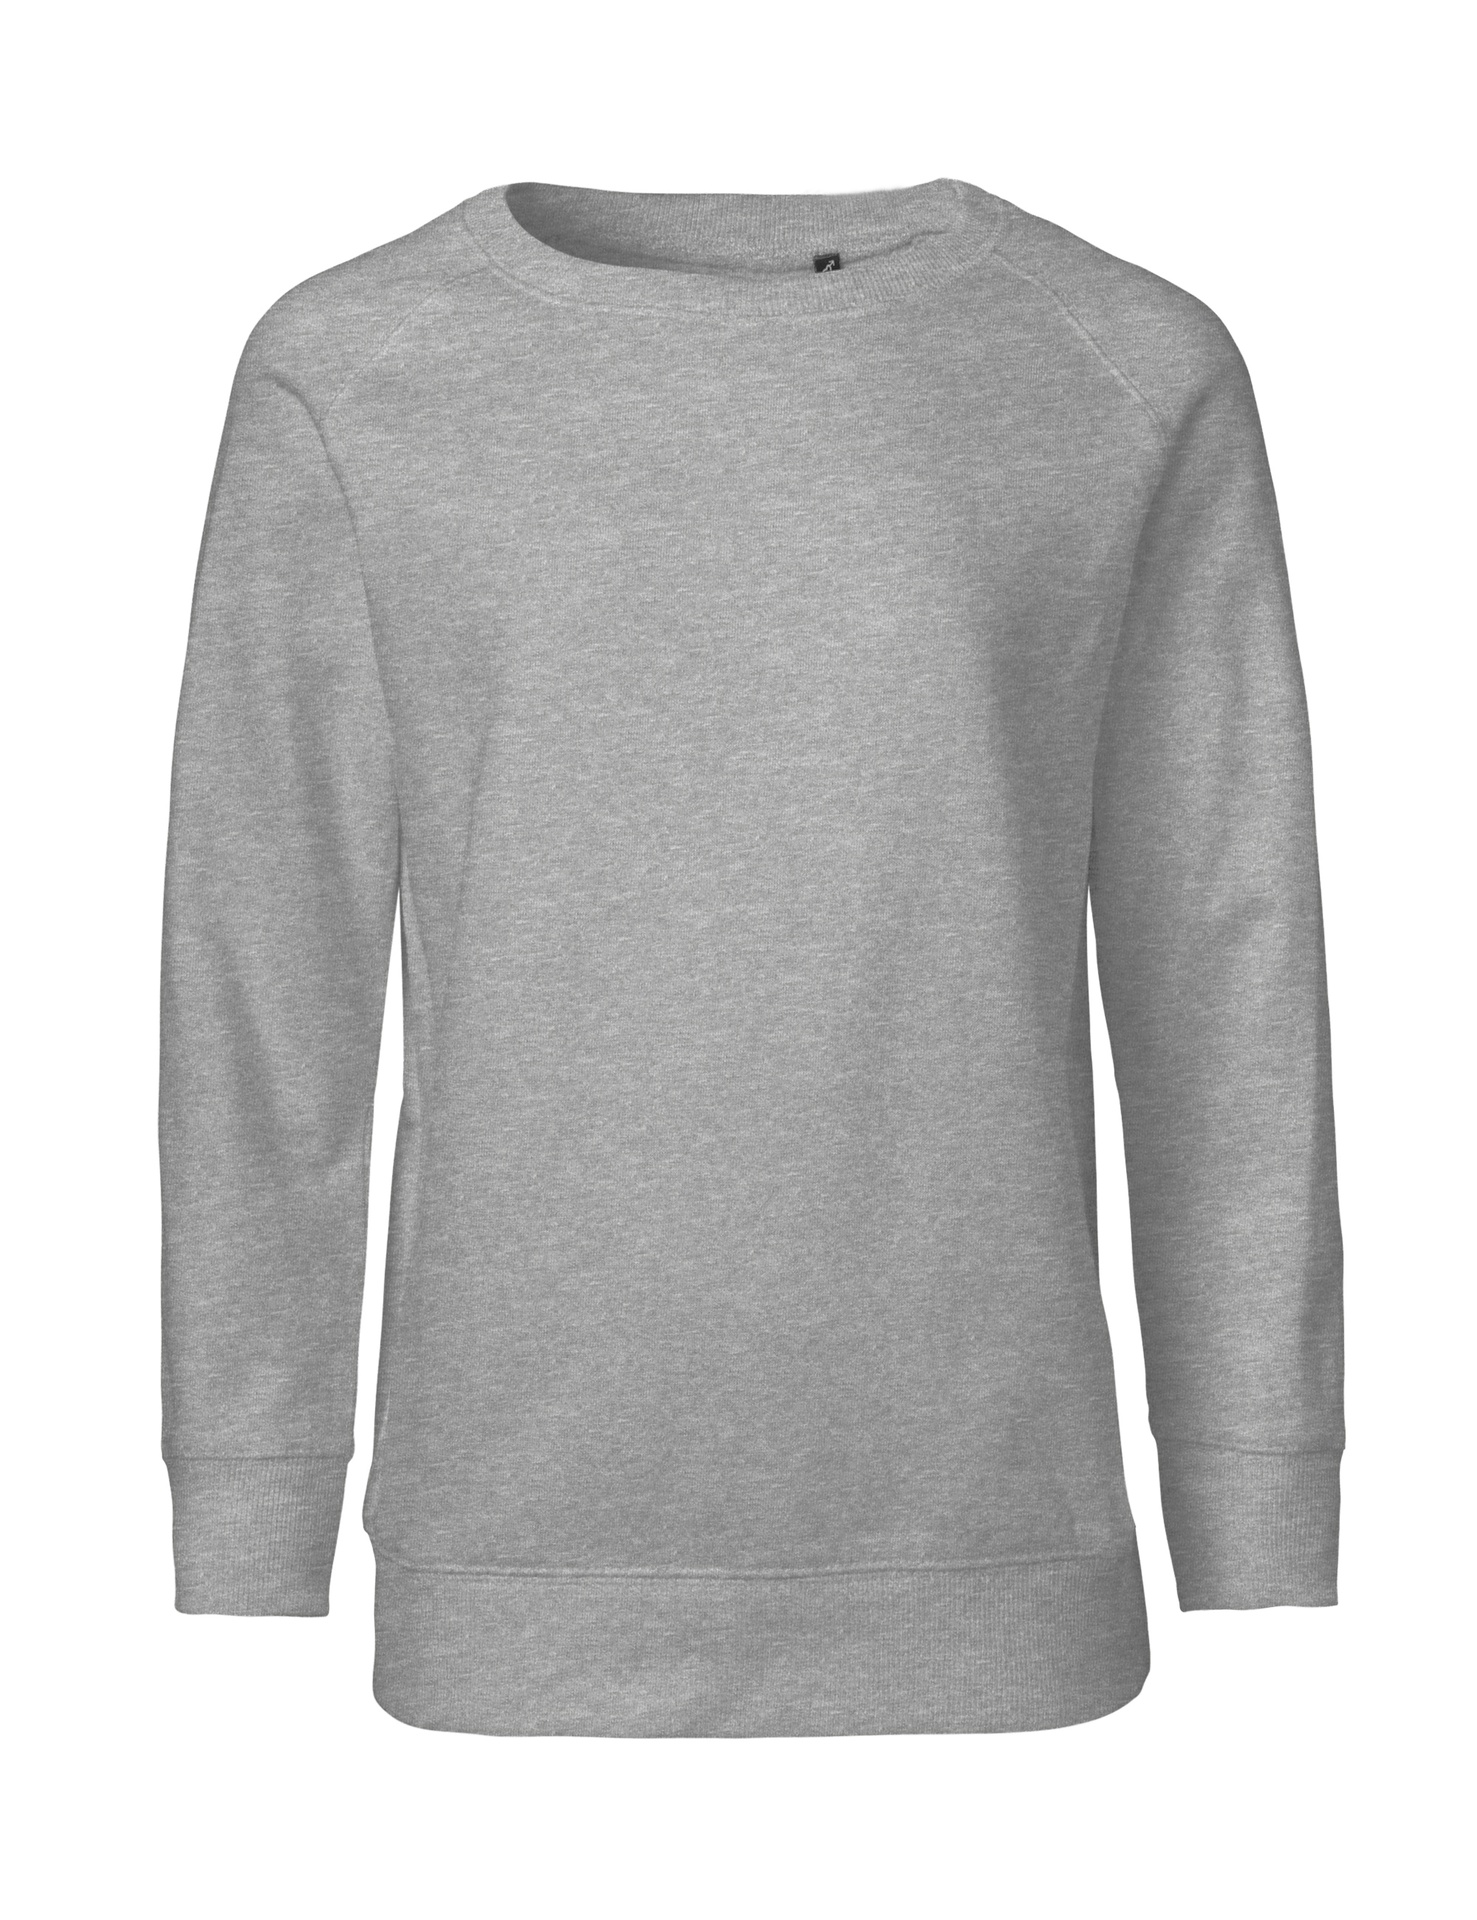 [PR/05543] Kids Sweatshirt (Sport Grey 21, 128/134 cm)